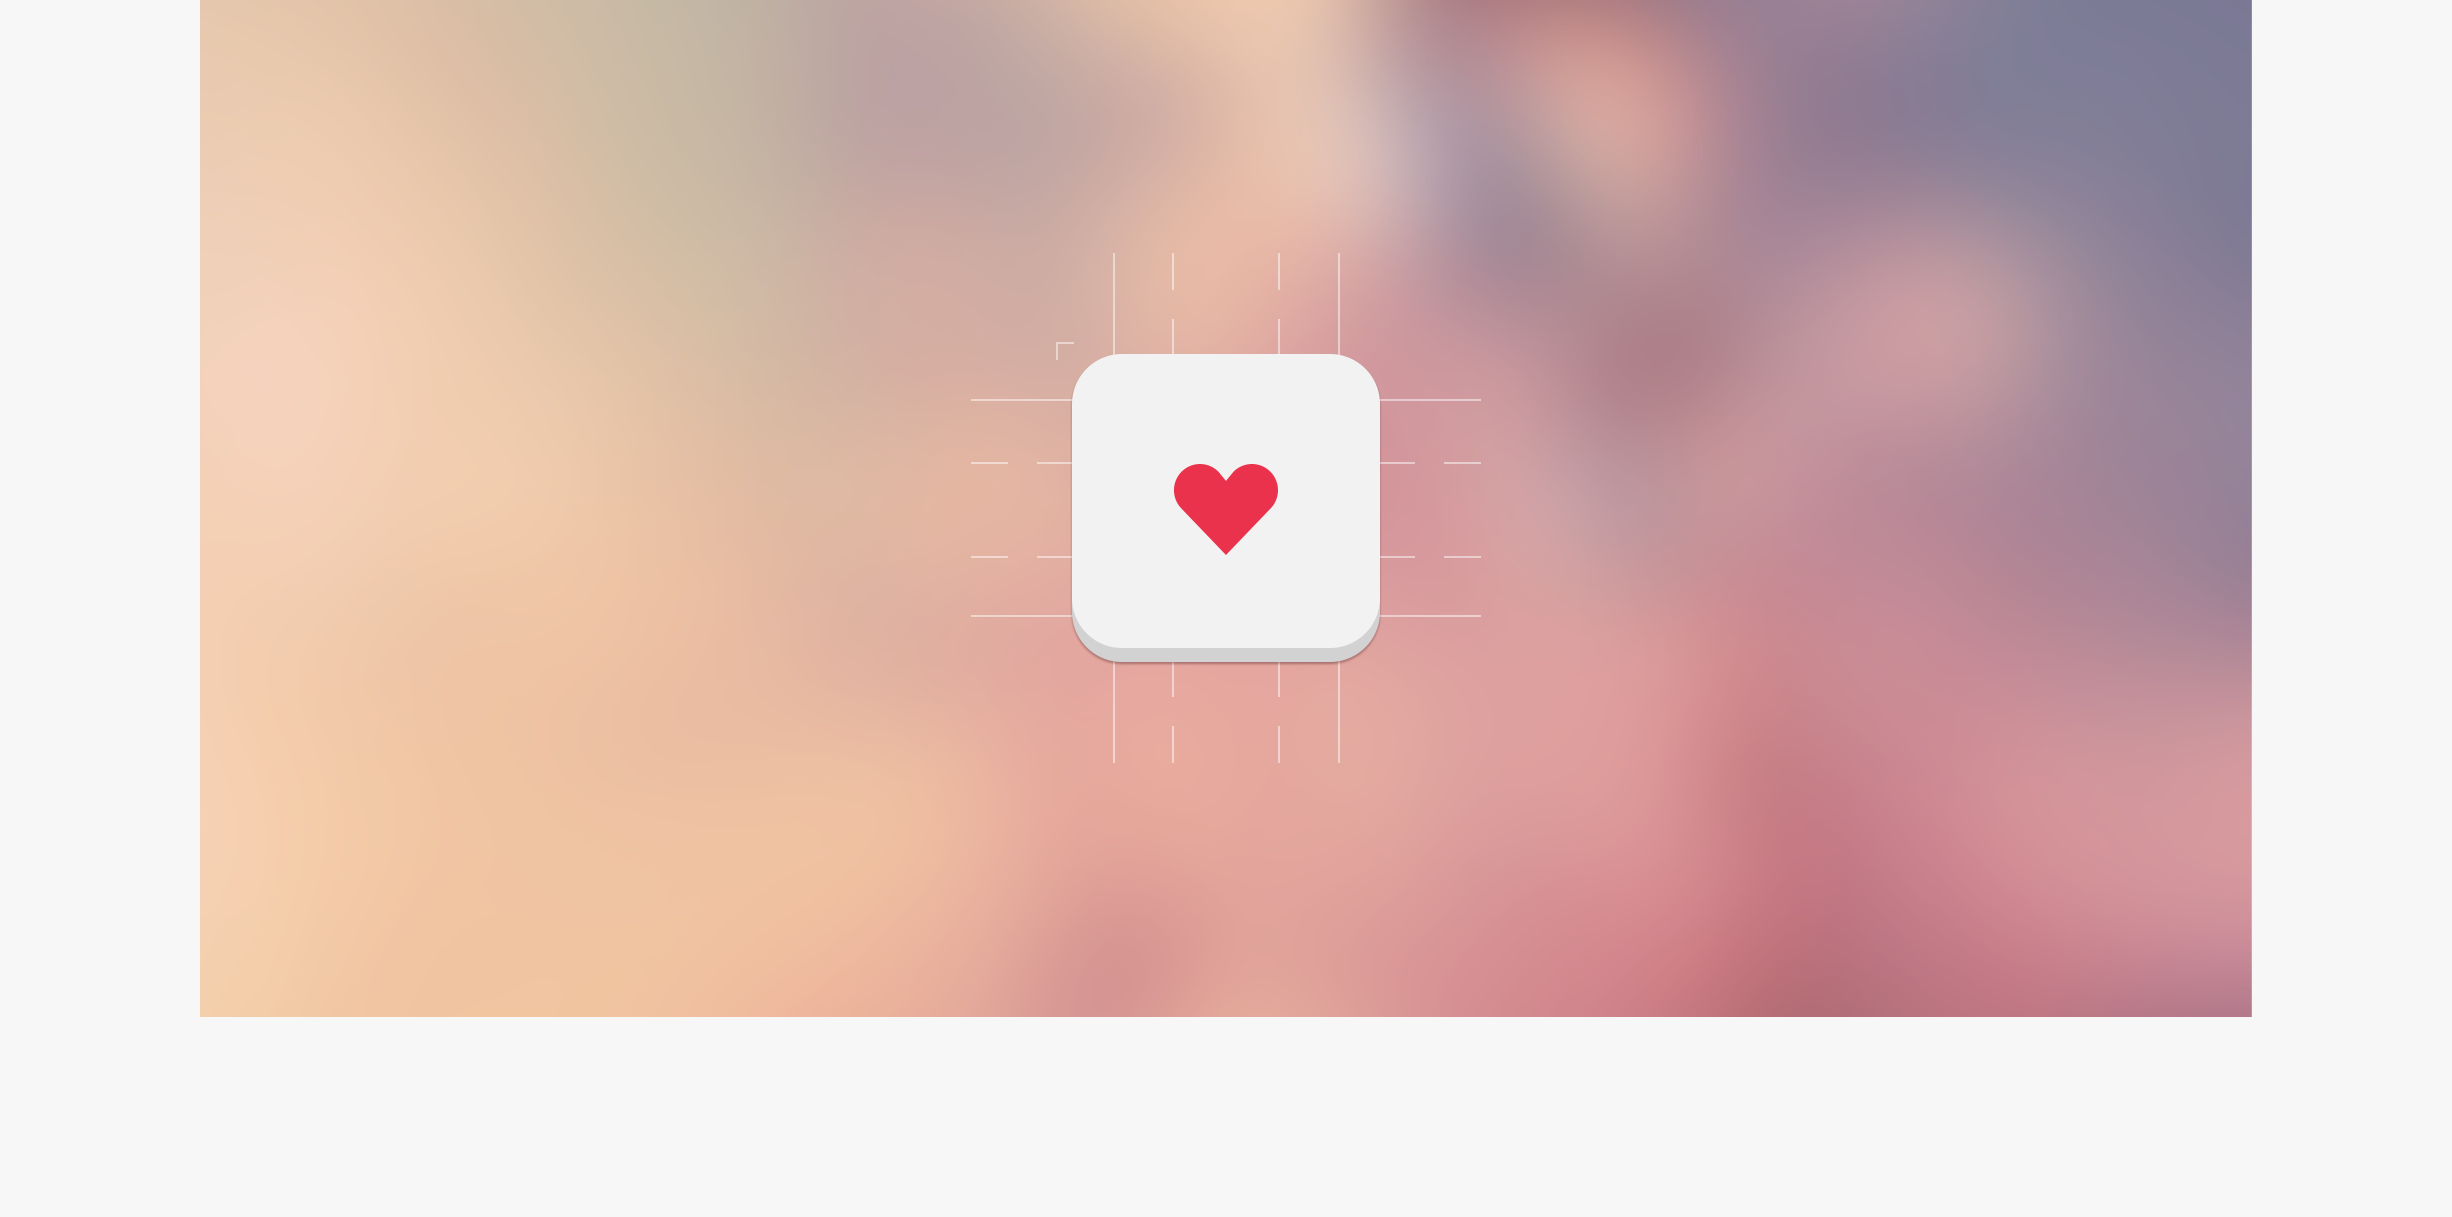 Icons - heart icon